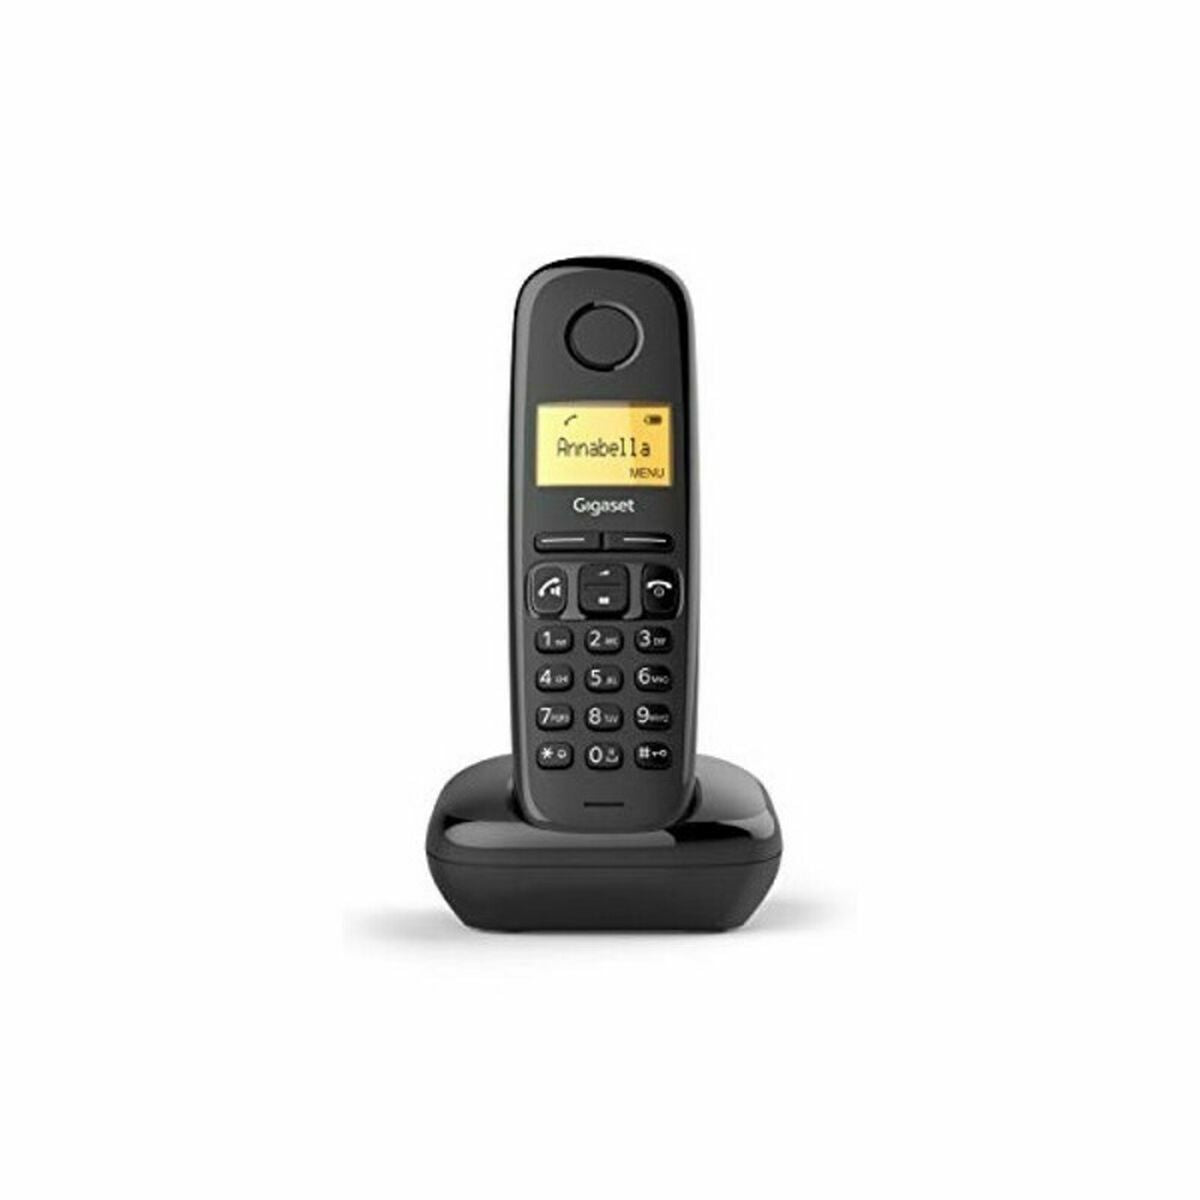 Wireless phone Gigaset S30852-H2812-D202 Wireless 1.5 "white